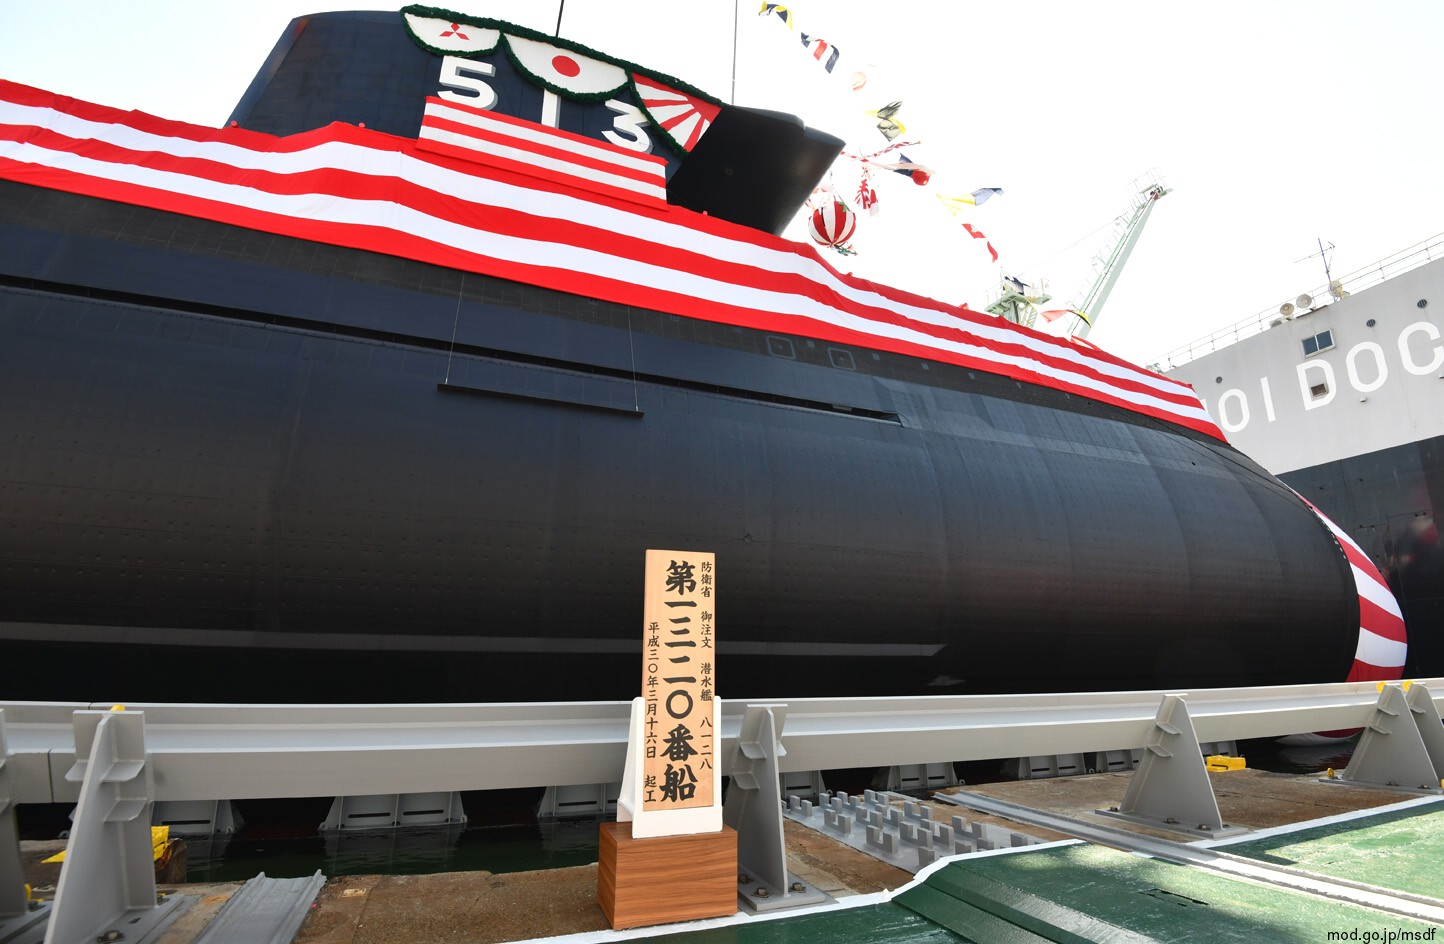 ss-513 js taigei 29ss class attack submarine ssk aip japan maritime self defense force jmsdf 06